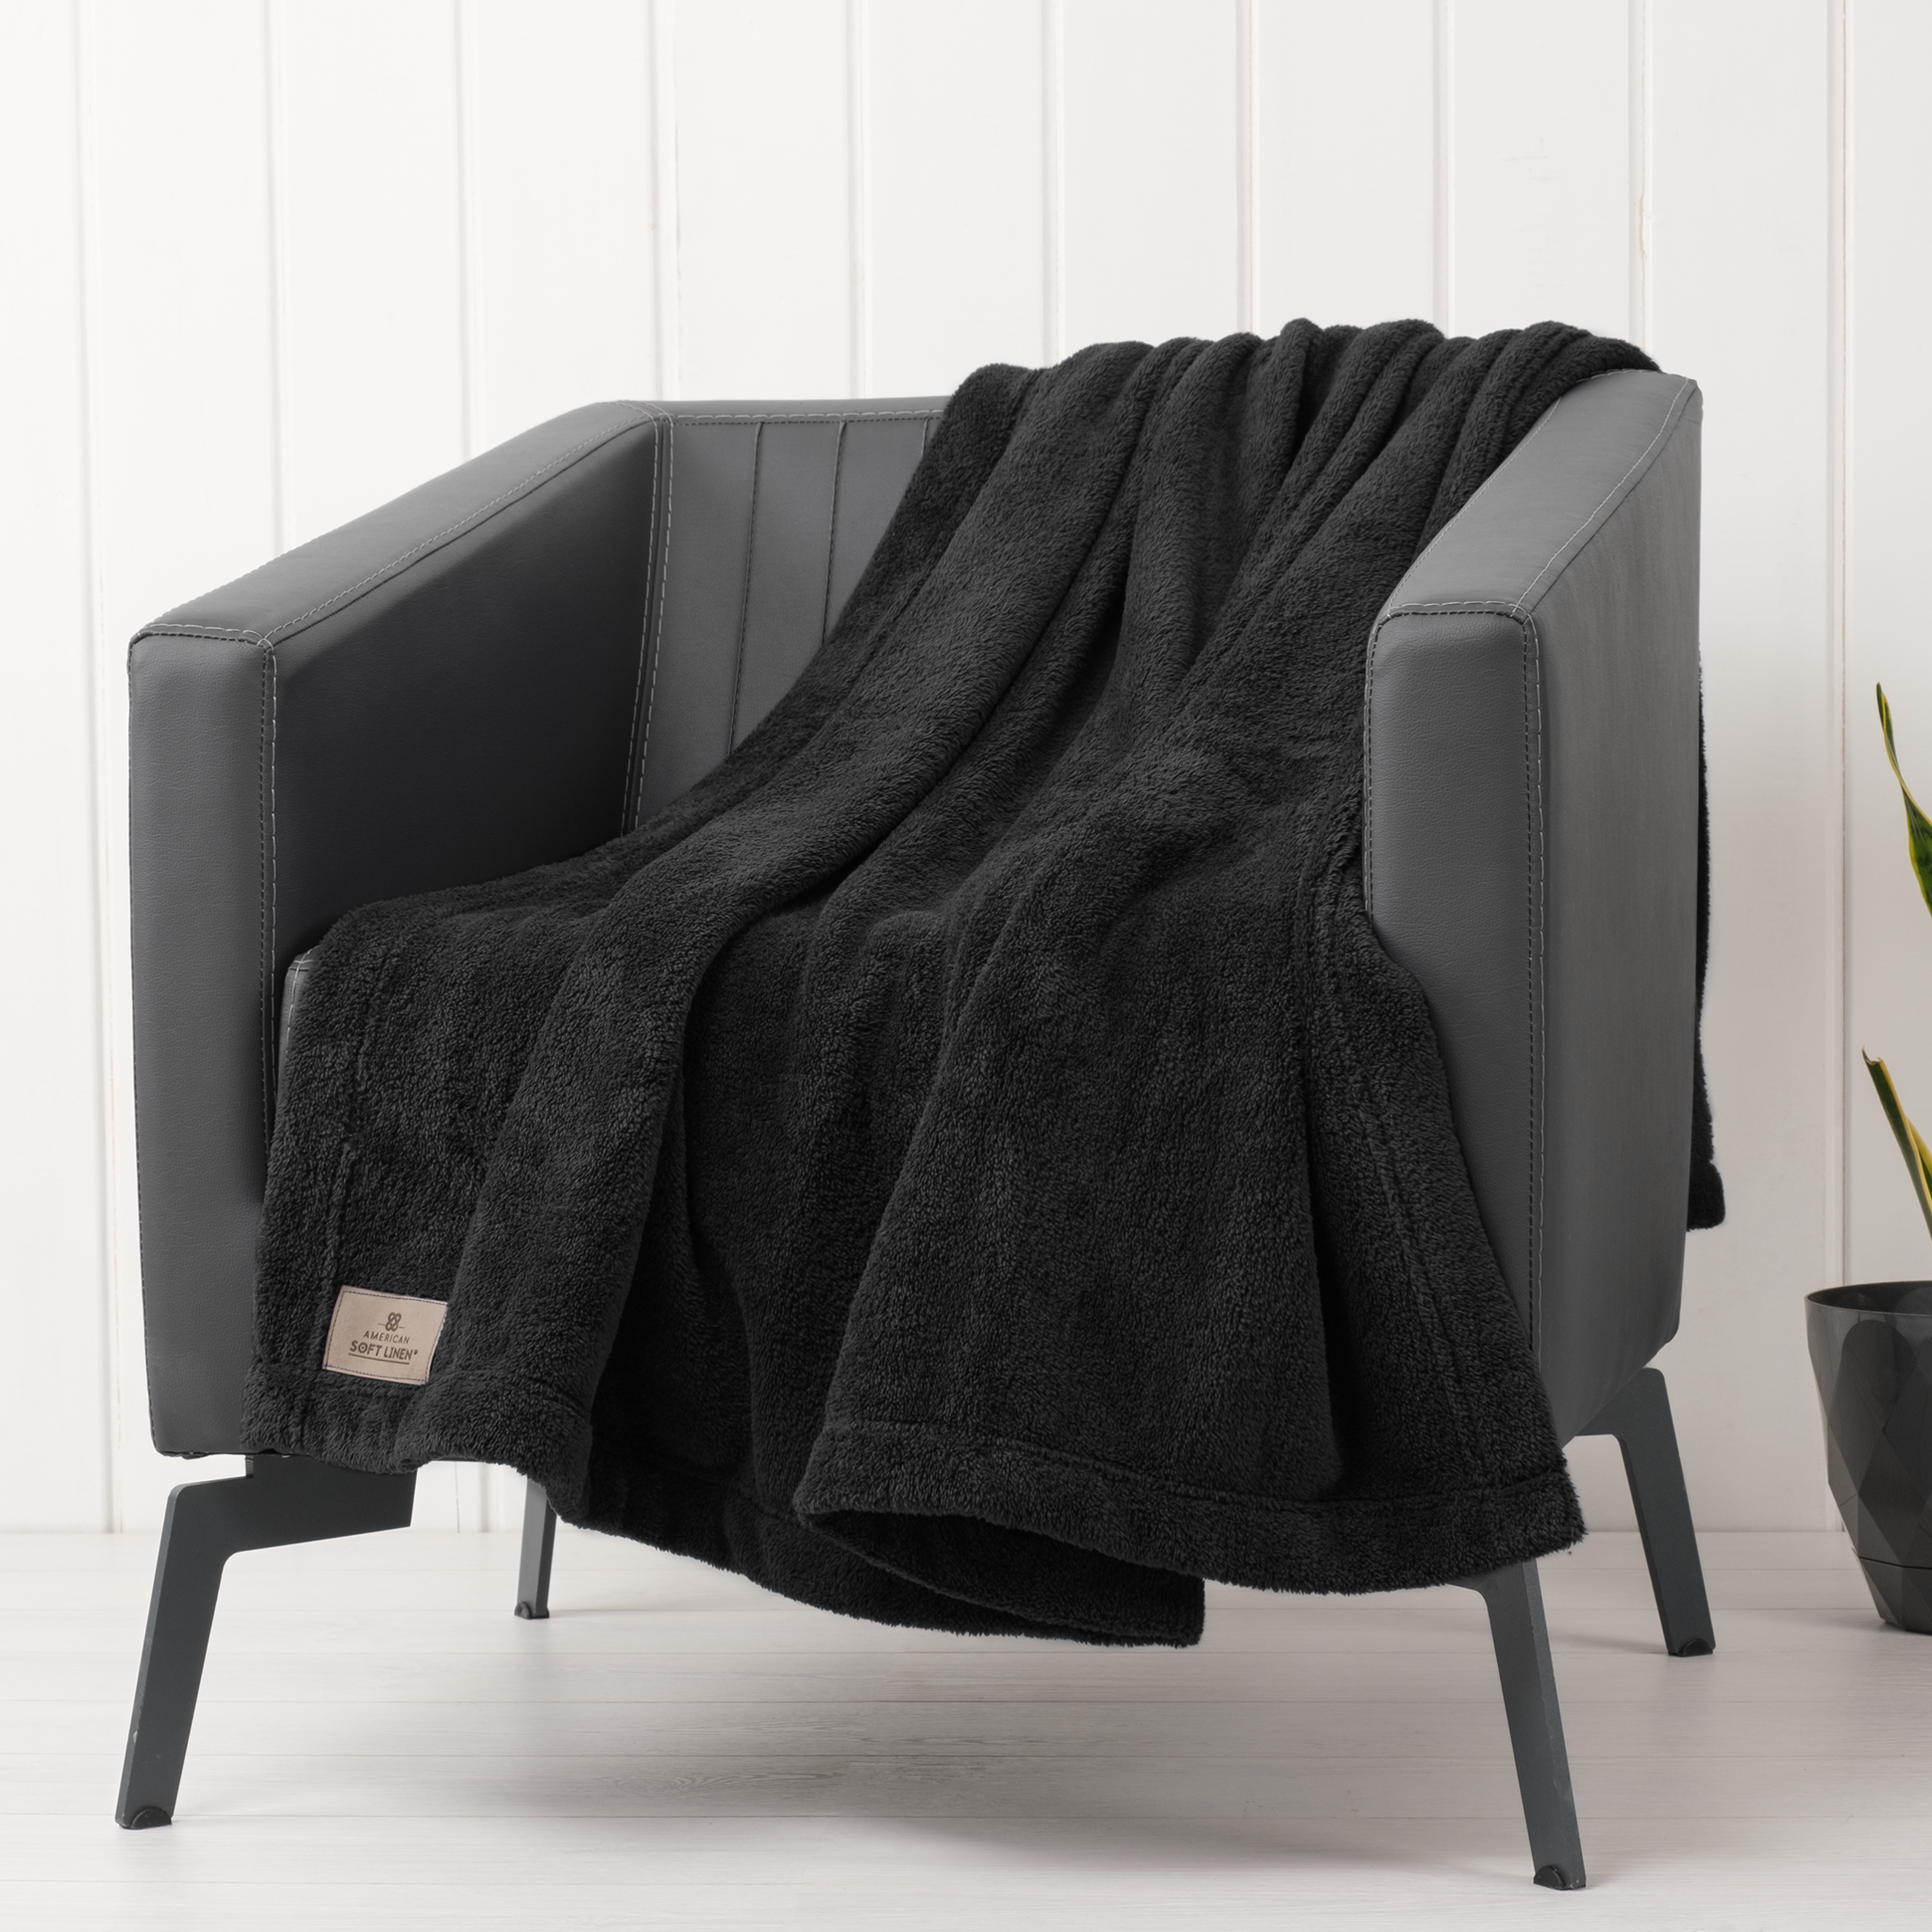 American Soft Linen - Bedding Fleece Blanket - Throw Size 50x60 inches - Black - 1